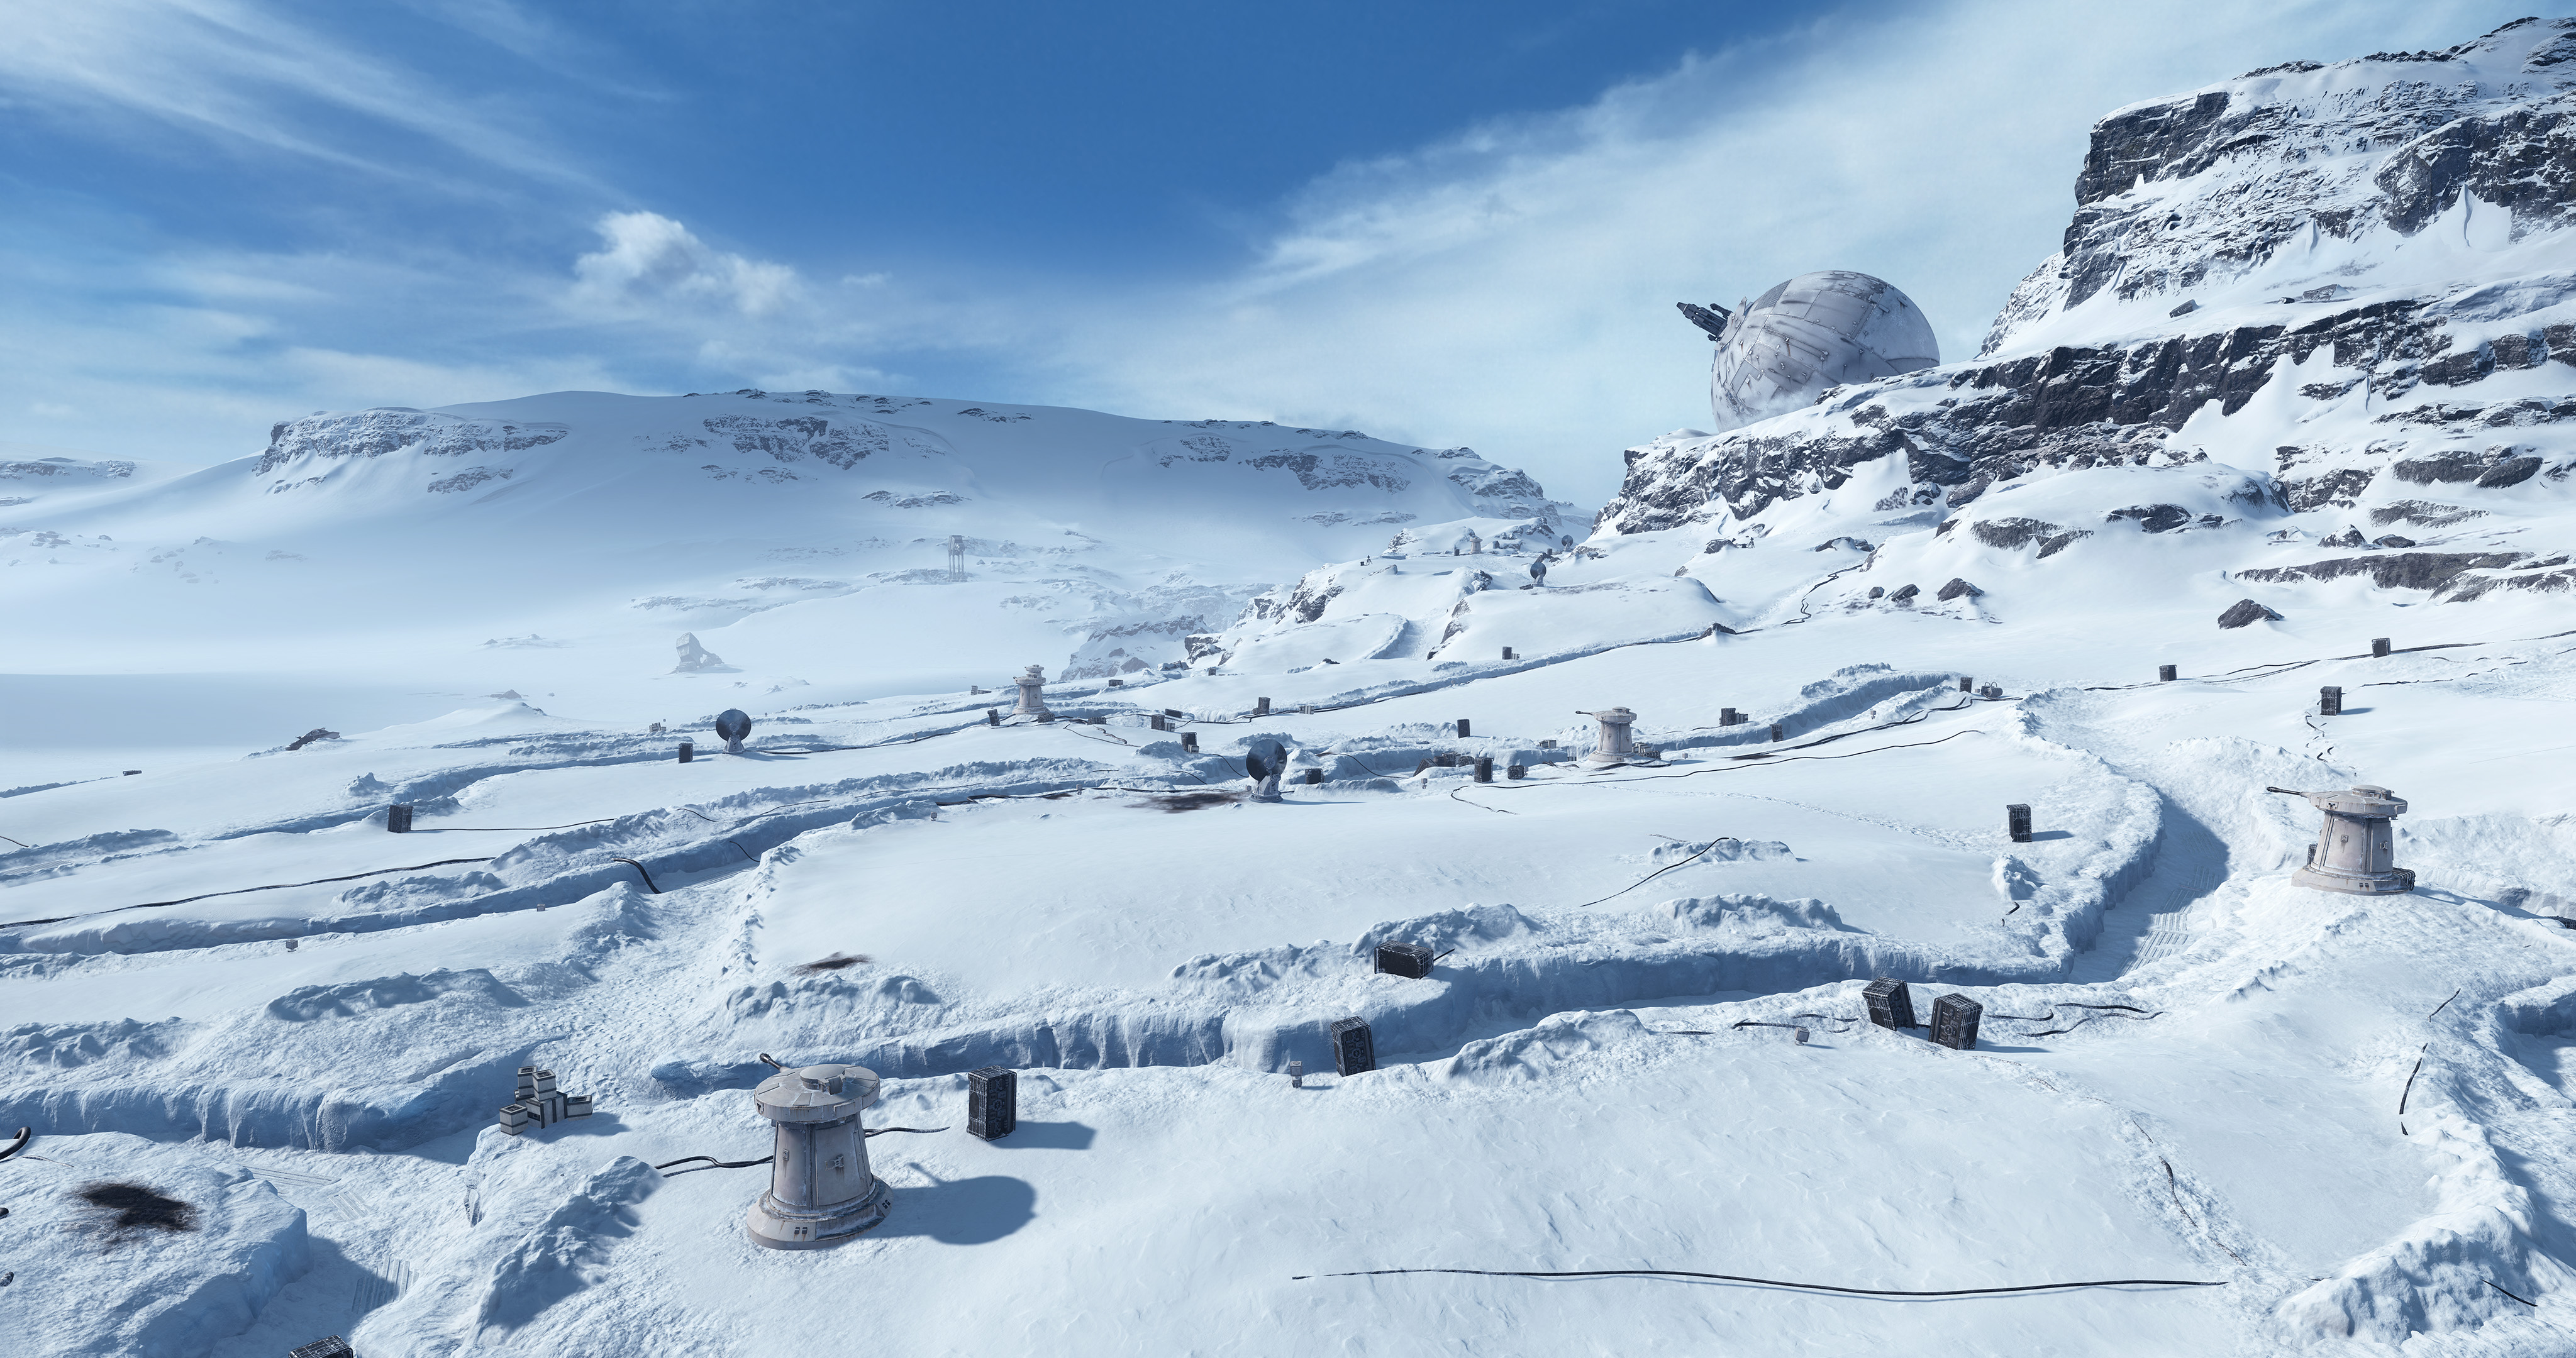 General 4096x2160 Star Wars Hoth snow